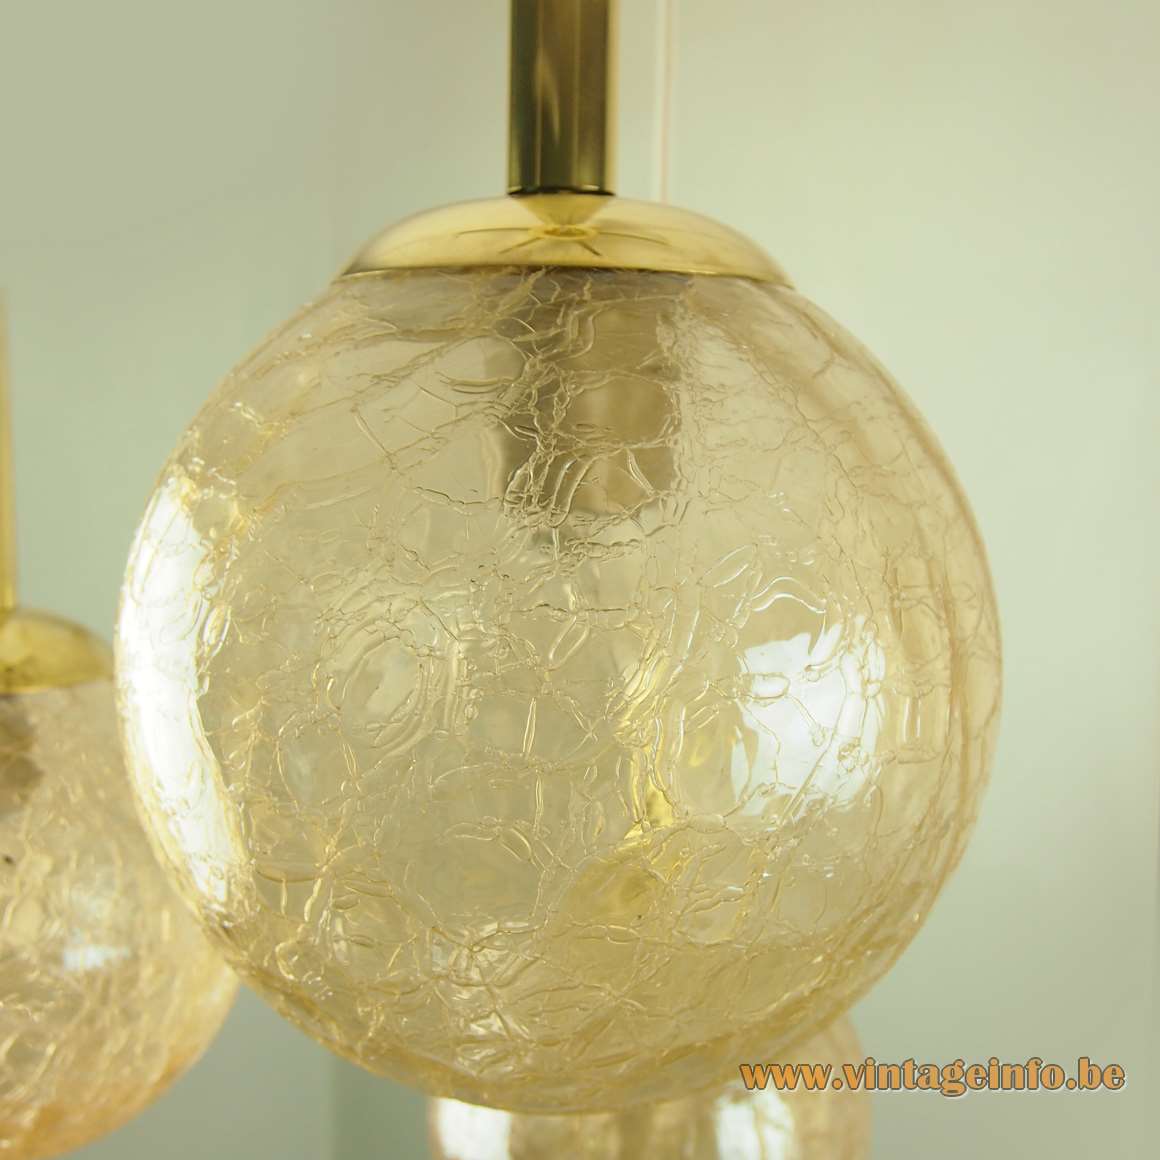 Crackle glass globes chandelier 6 amber cascading pendant lamps brass tubes 1970s Wortmann WOFI Leuchten Germany